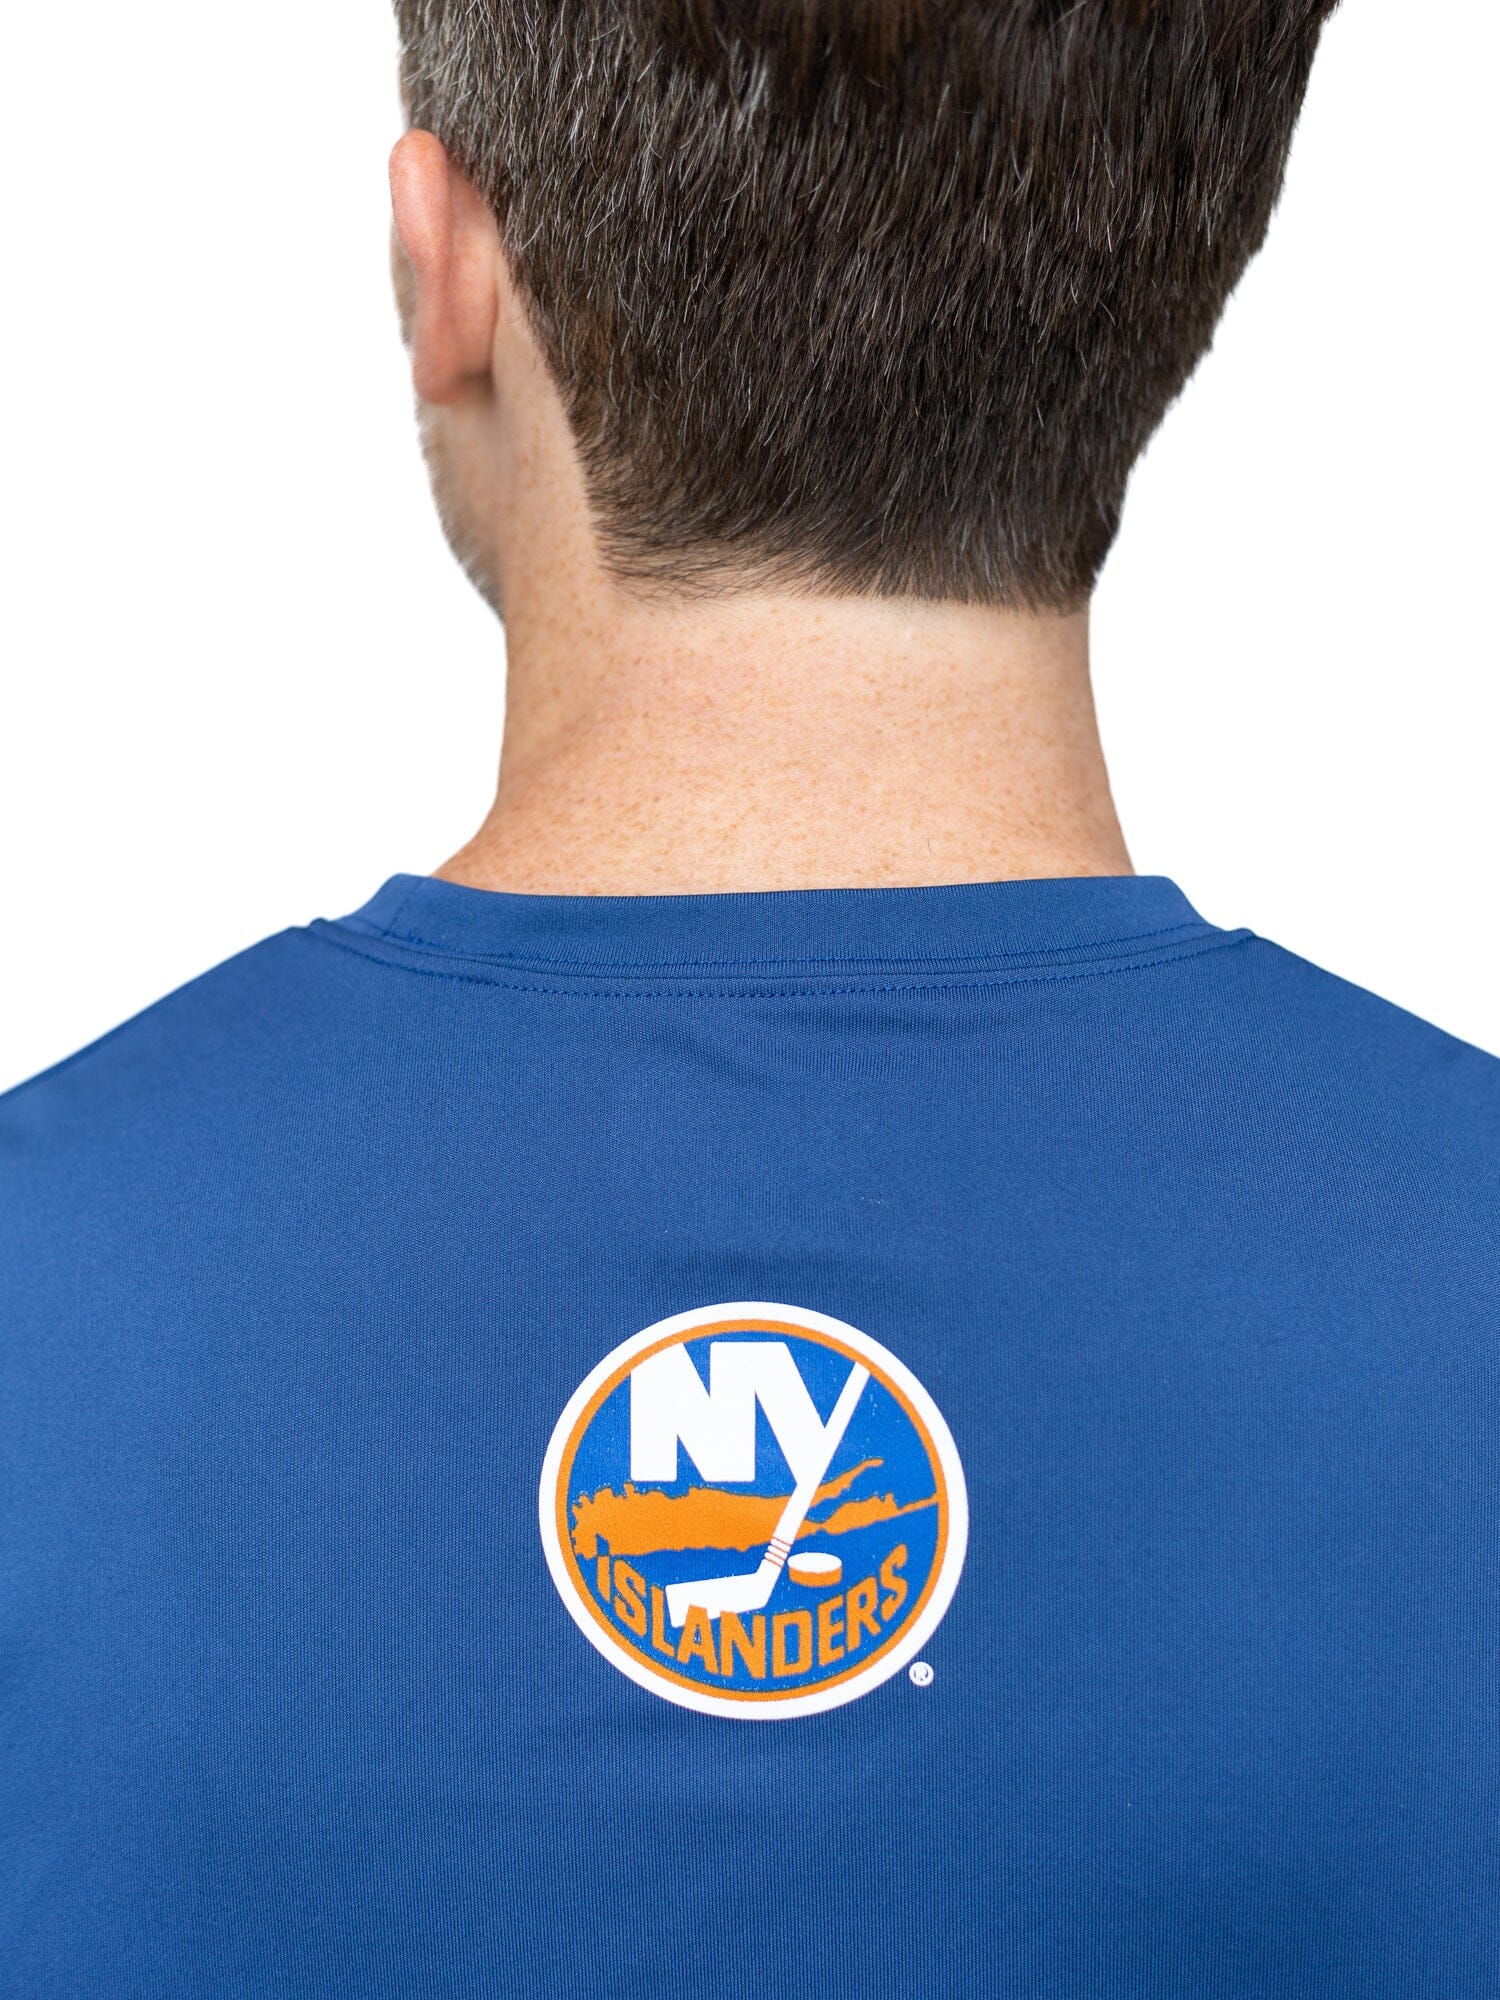 New York Islanders "Full Fandom" Moisture Wicking T-Shirt - Back Logo